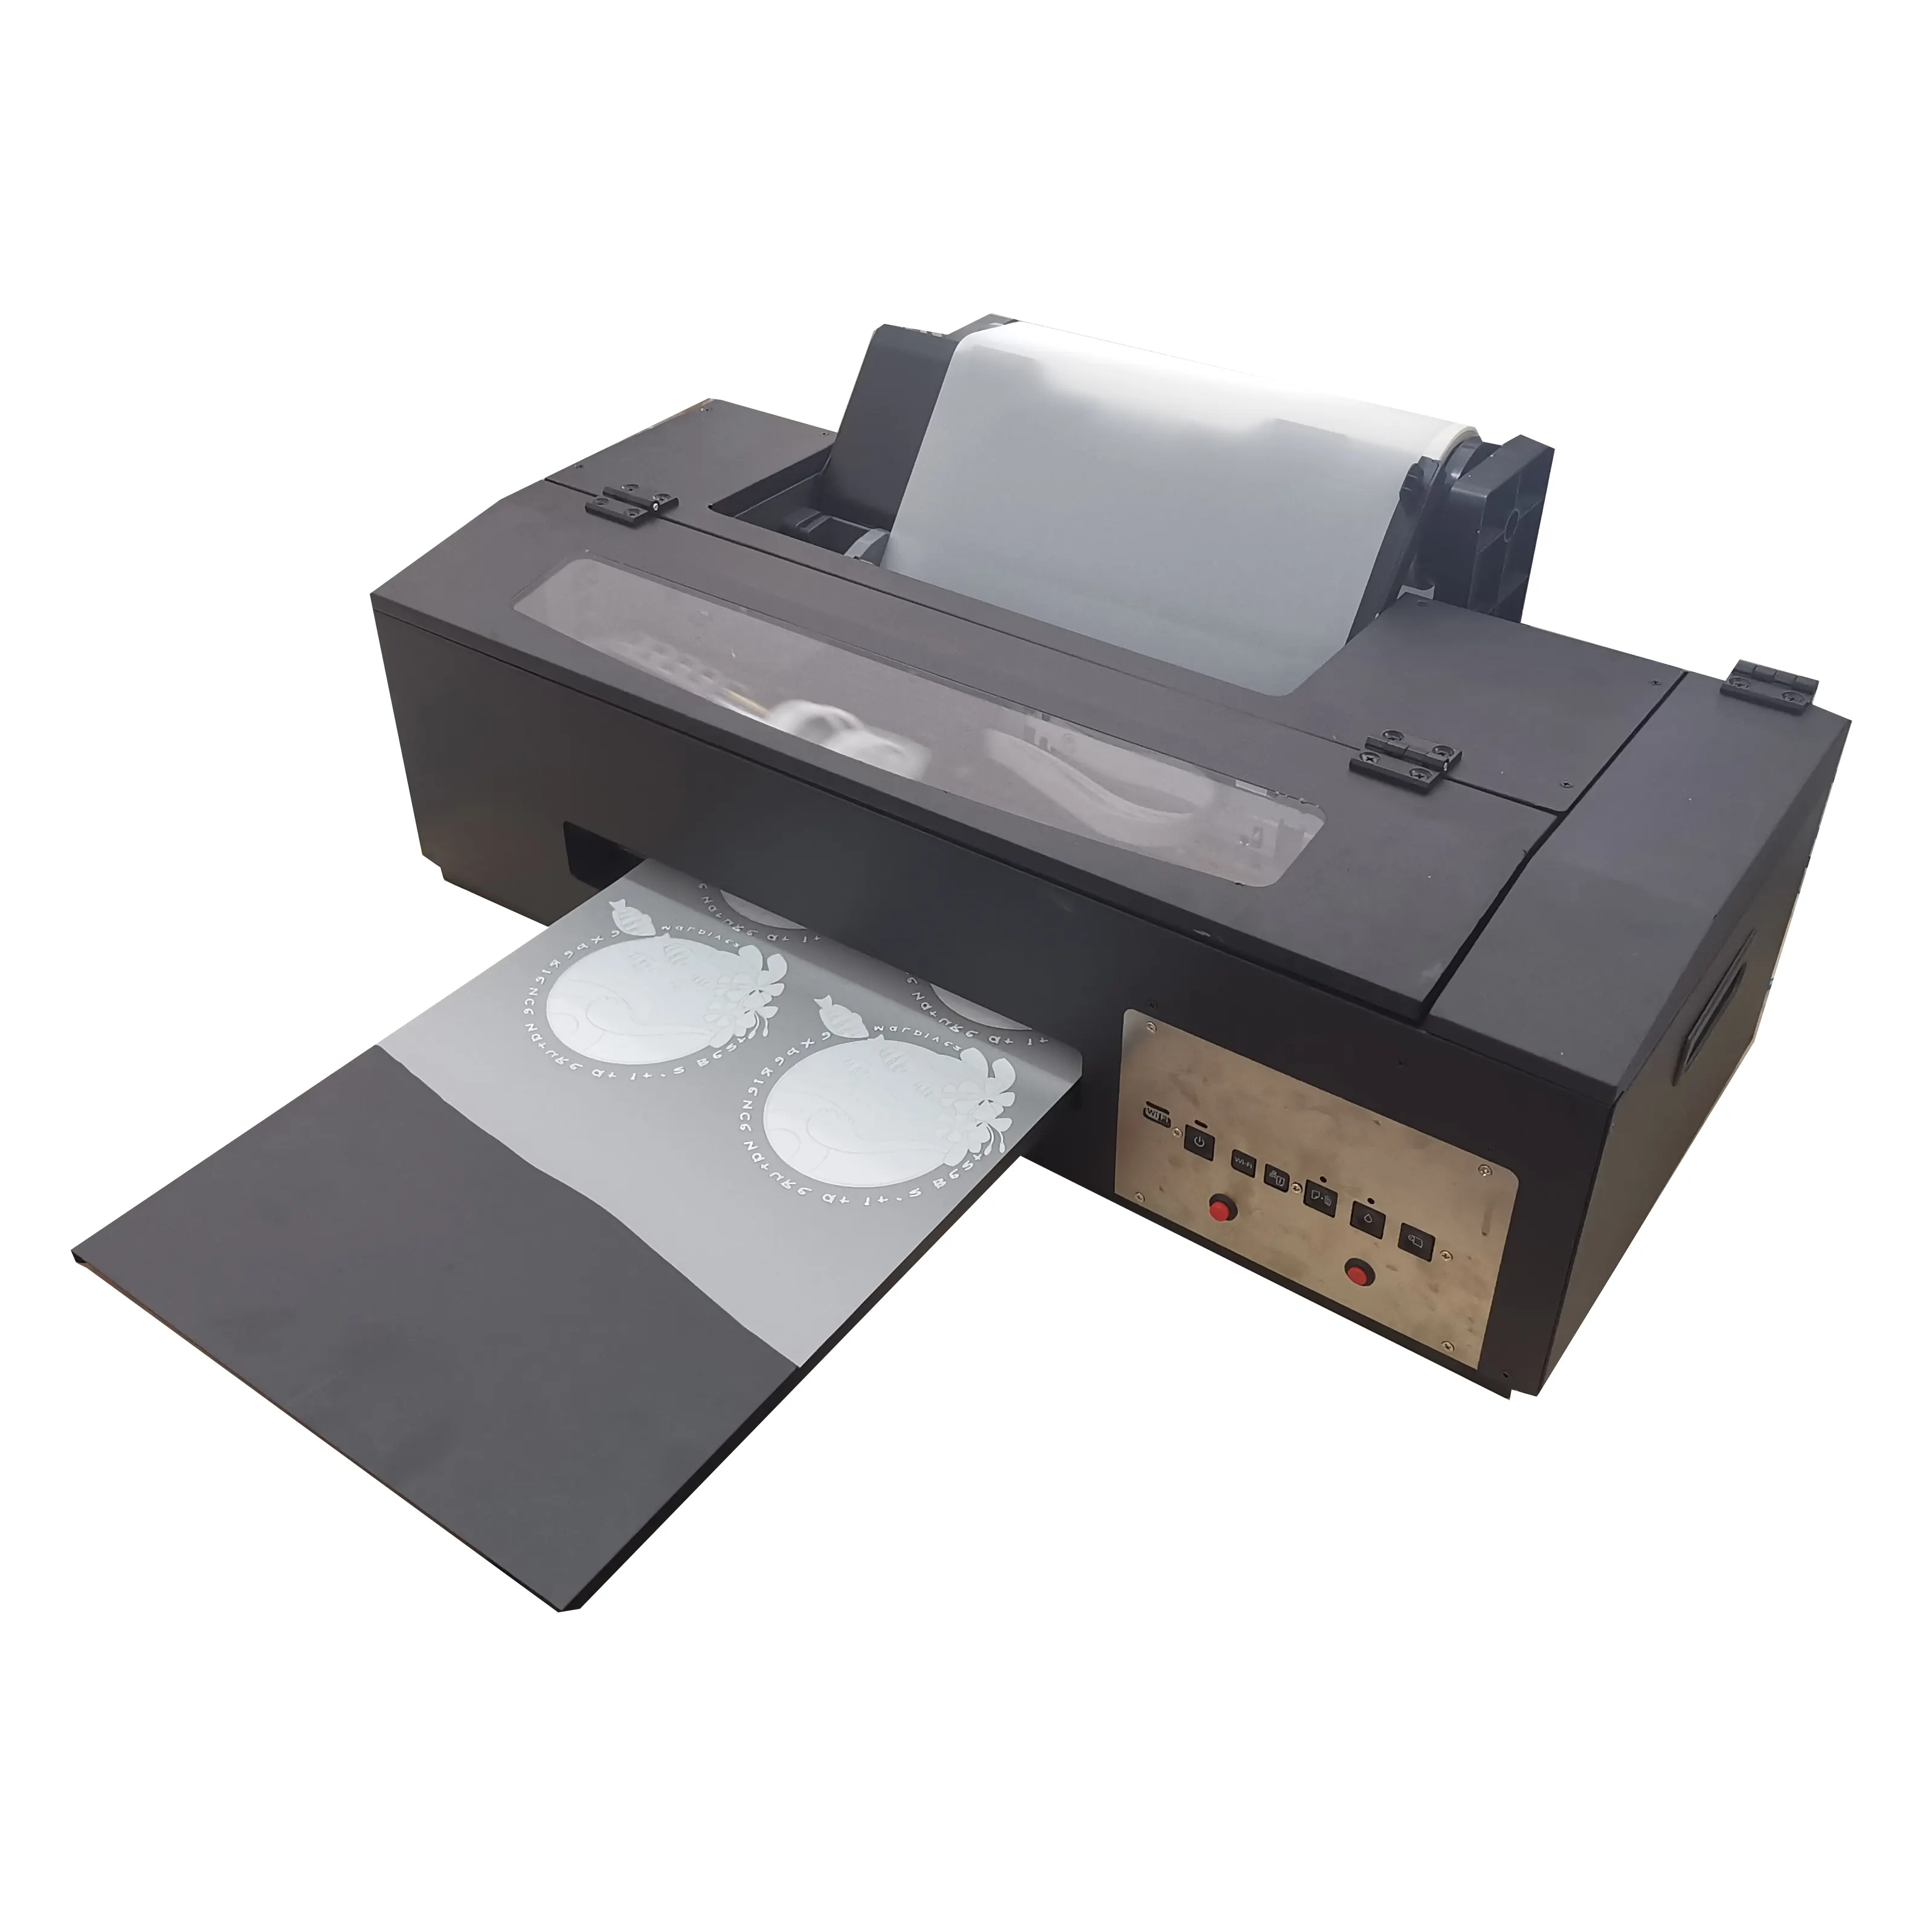 Yilee Small Business Machine Ideas L1800 DX5 A3 Dtf Printer Printing Machine with Powder Shaker Machine Inkjet Printers CE 500ml